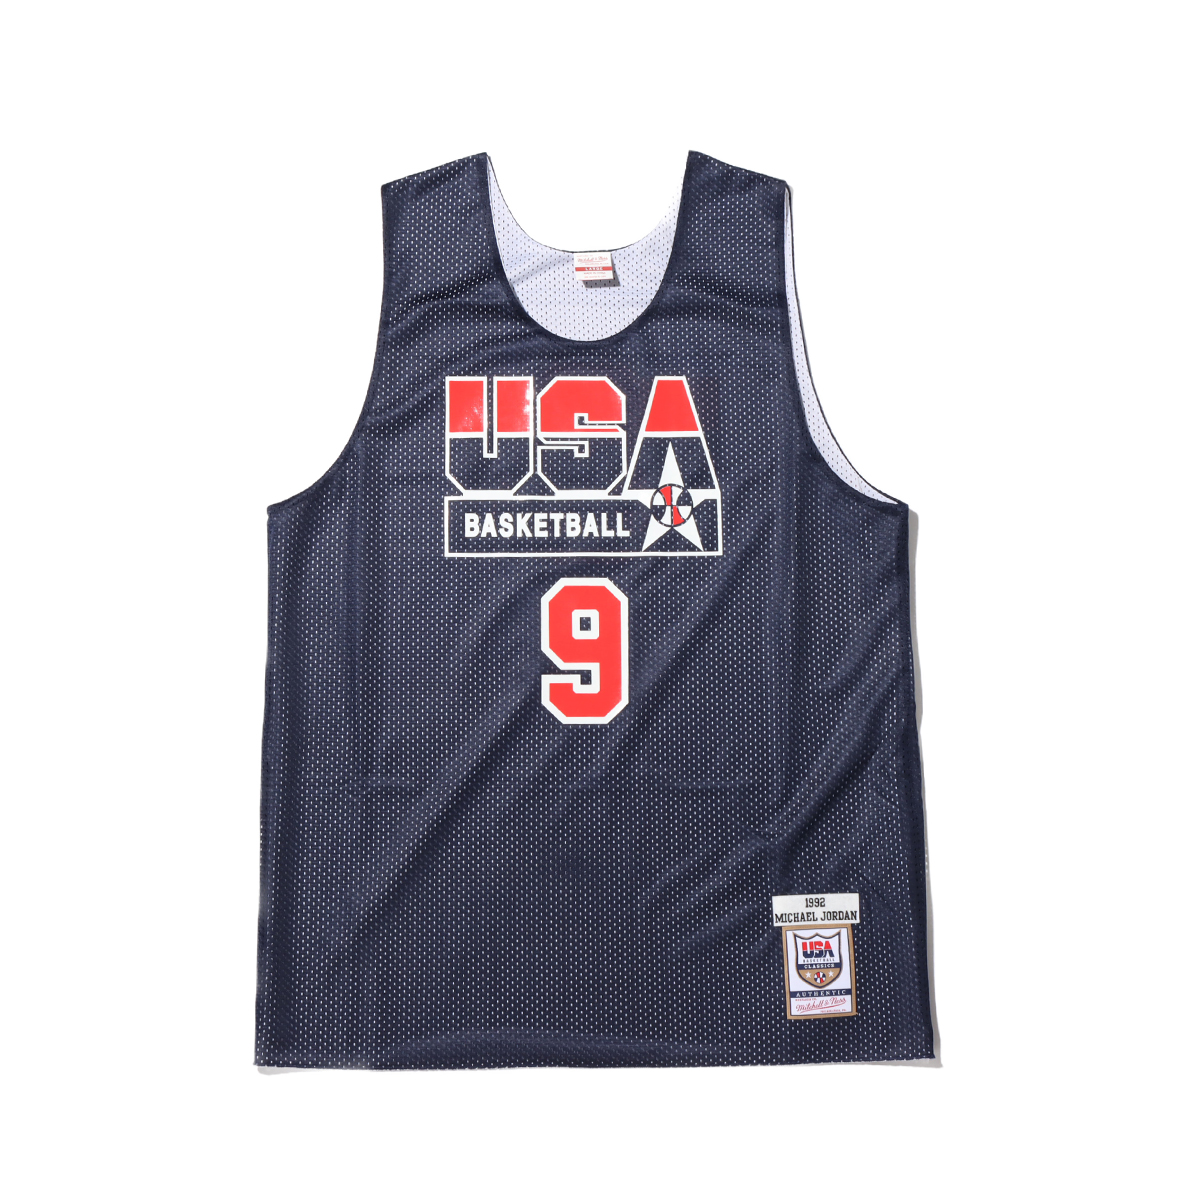 【楽天市場】Mitchell & Ness NBA AUTHENTIC REV PRACTICE JERSEY TEAM USA 92